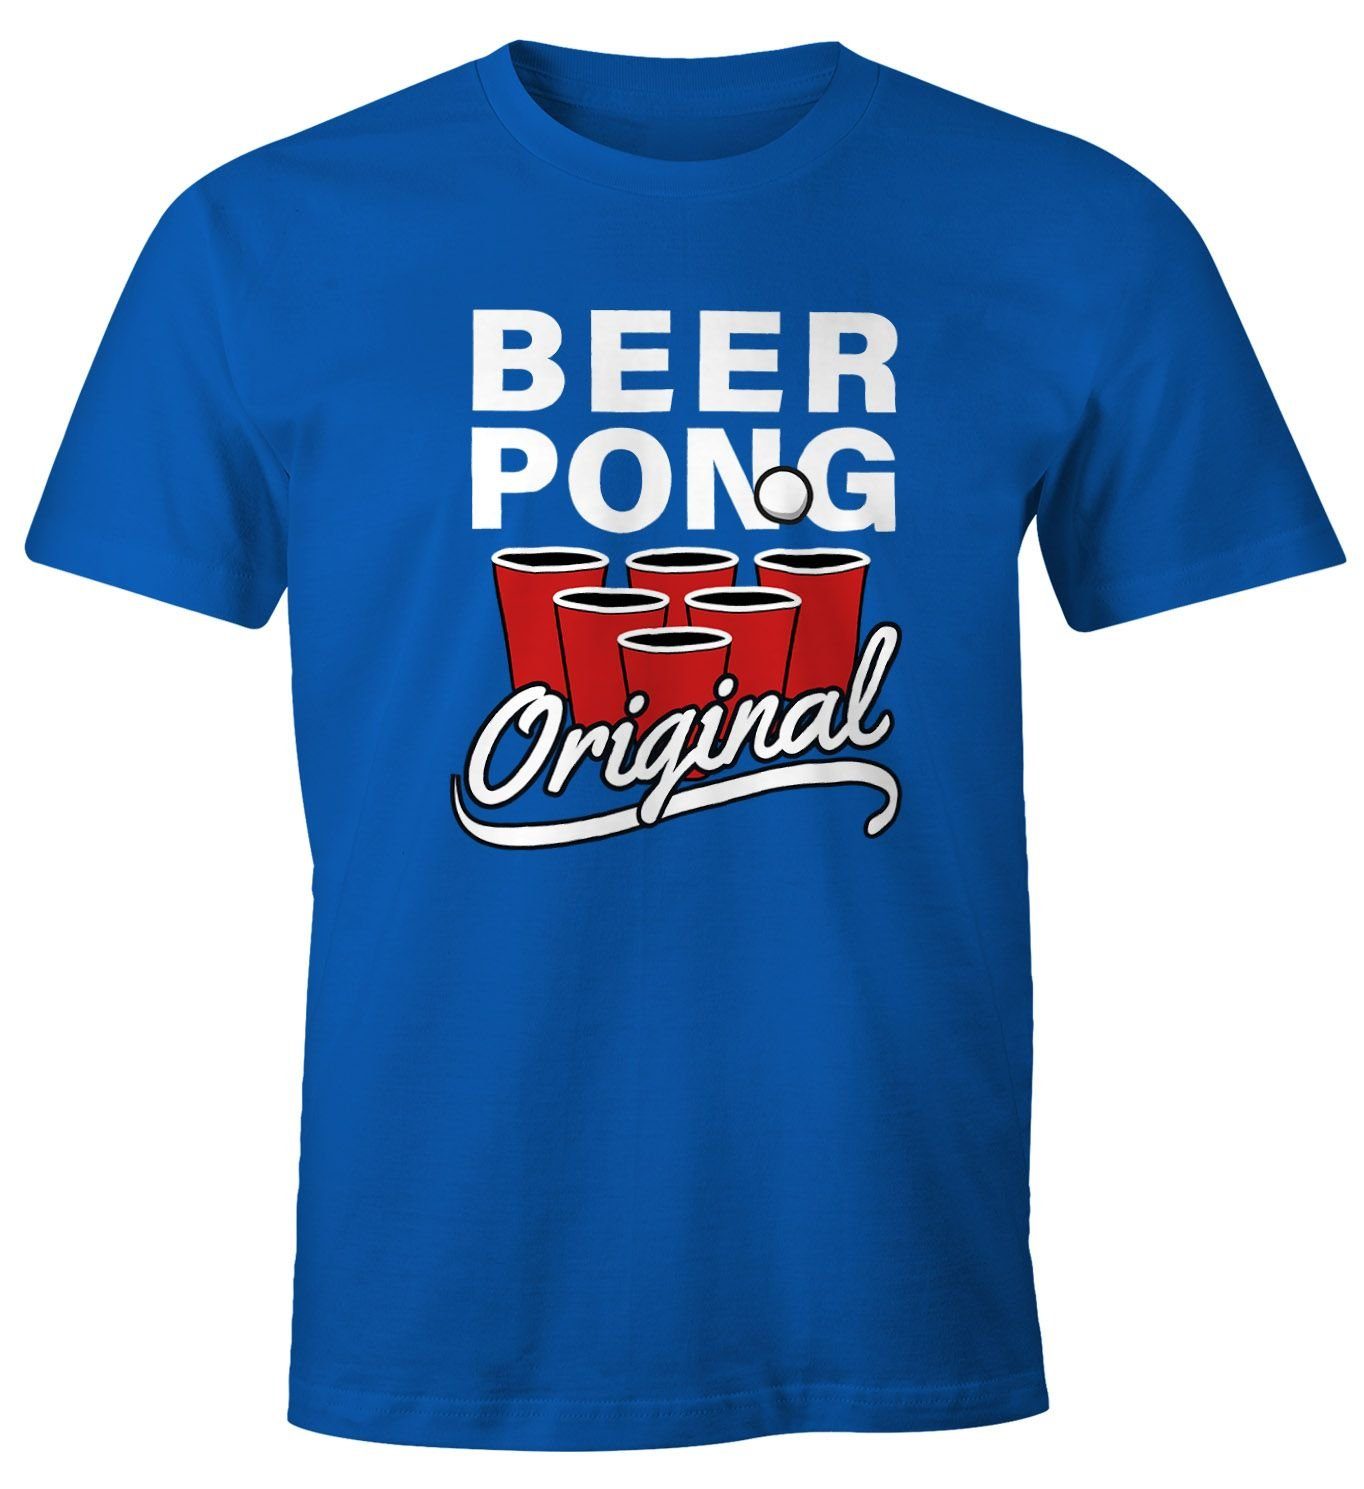 MoonWorks Print-Shirt Herren T-Shirt Beer Pong Original Bier Fun-Shirt Moonworks® mit Print blau